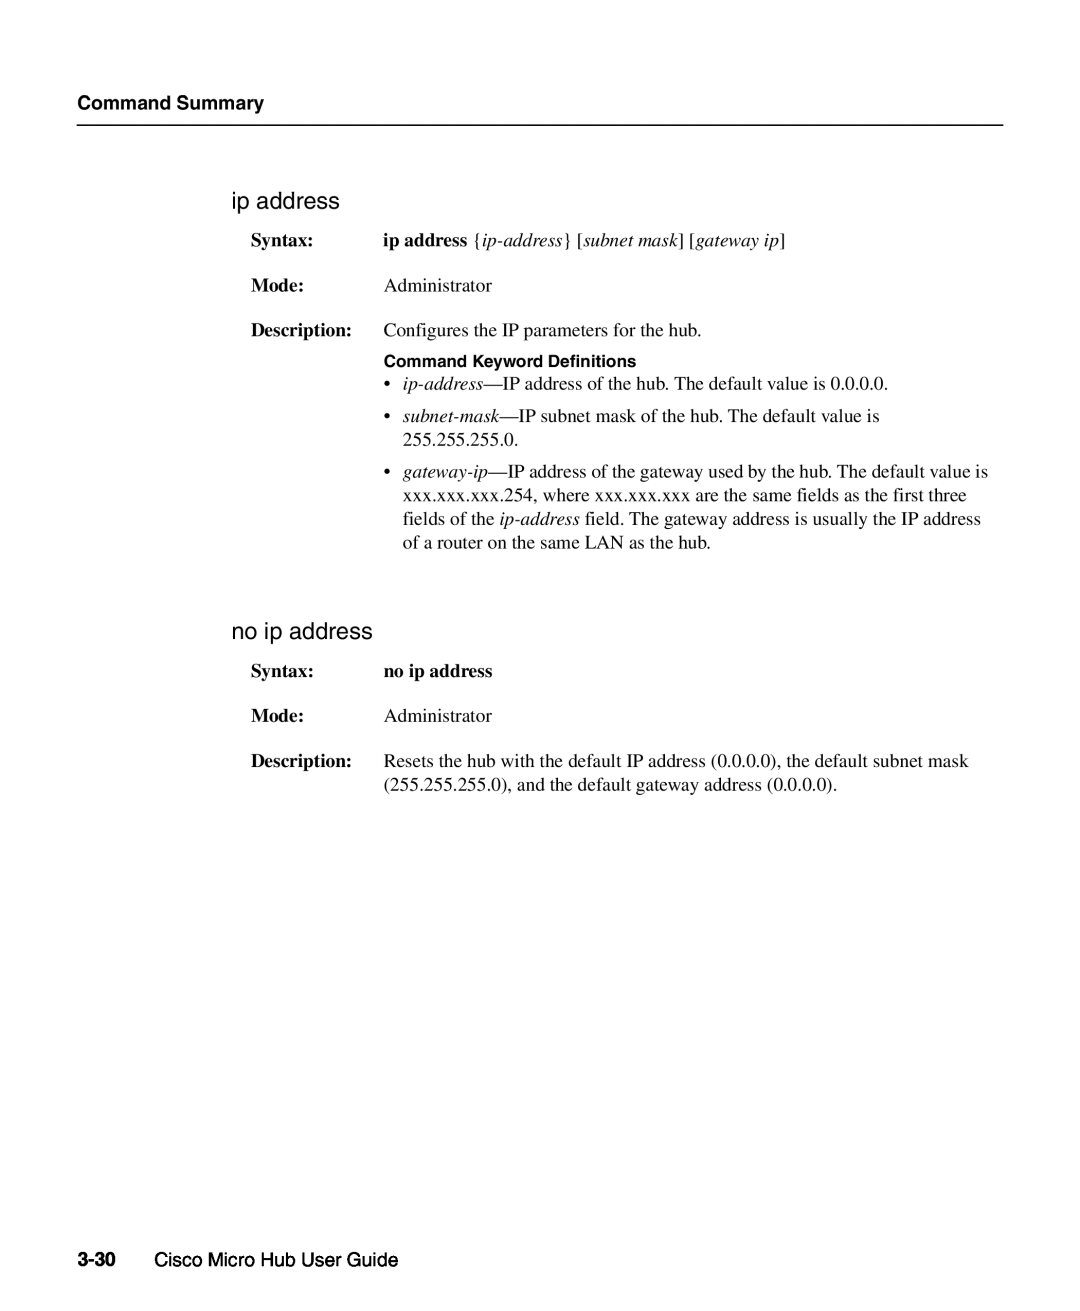 Cisco Systems 1503 manual no ip address, Command Summary, Cisco Micro Hub User Guide 